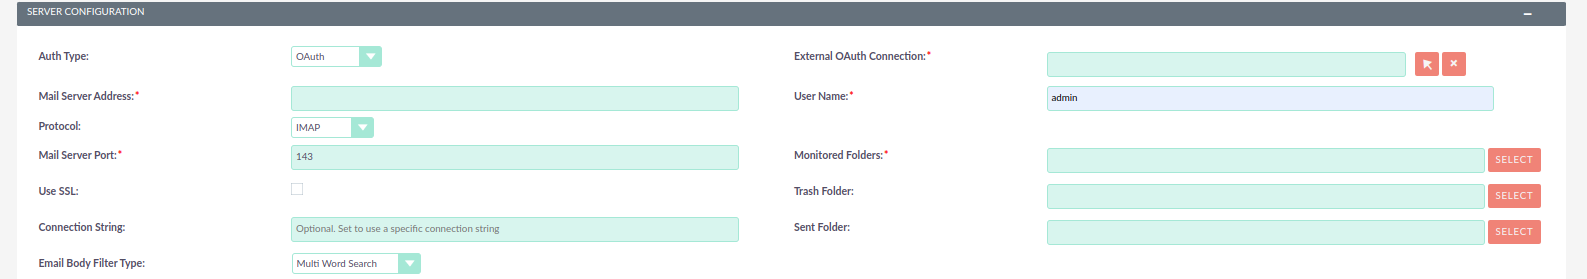 OAuth Server Configuration